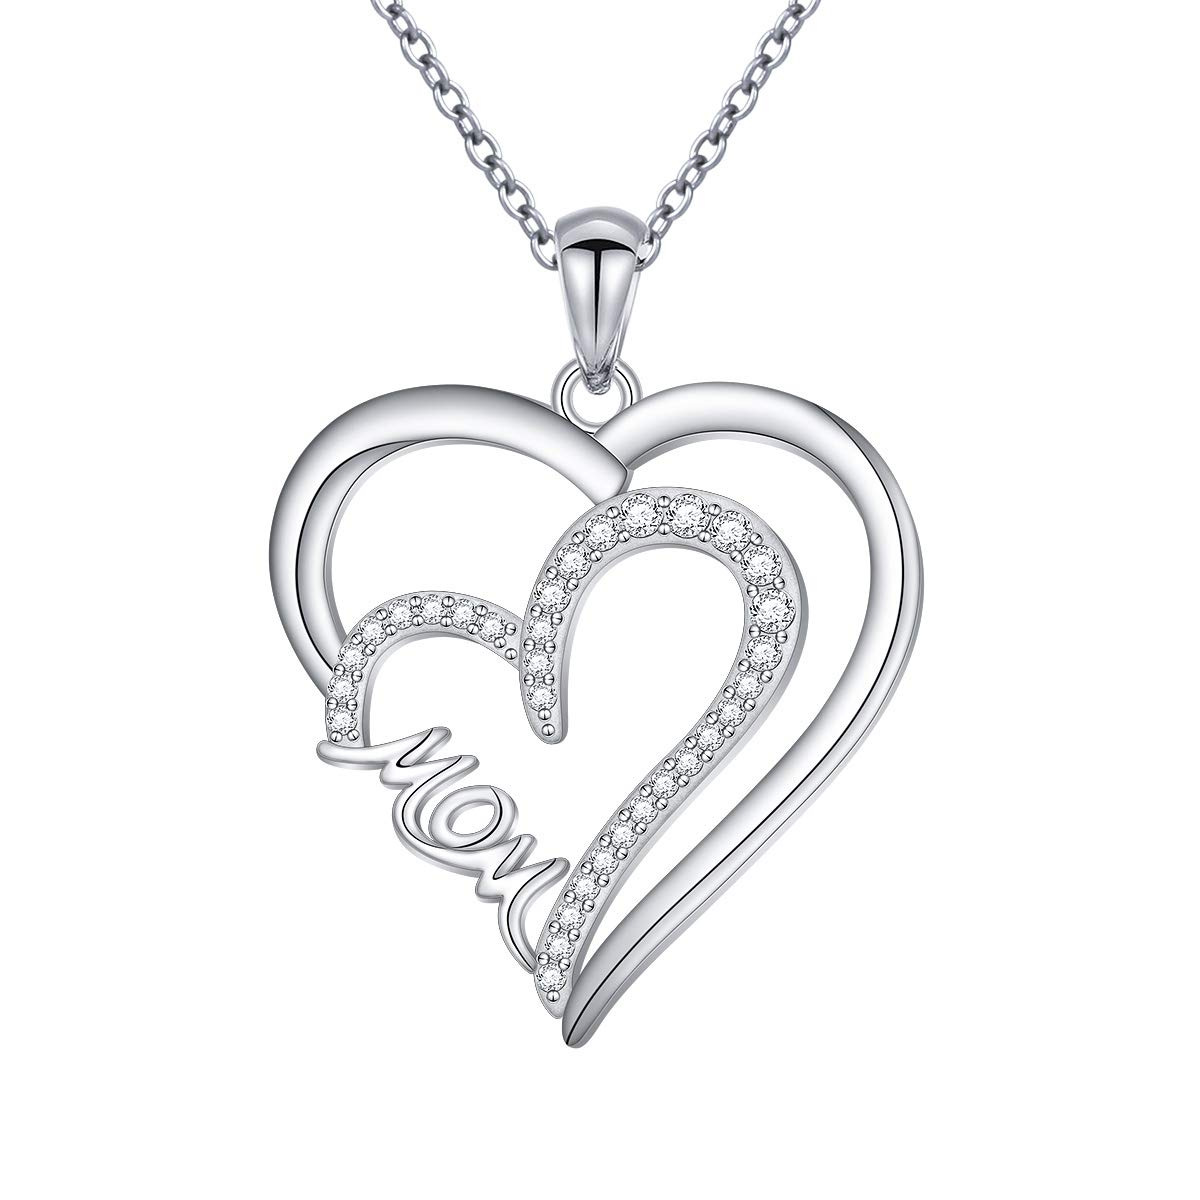 Cz MOM Love Heart Sterling Silver Pendant